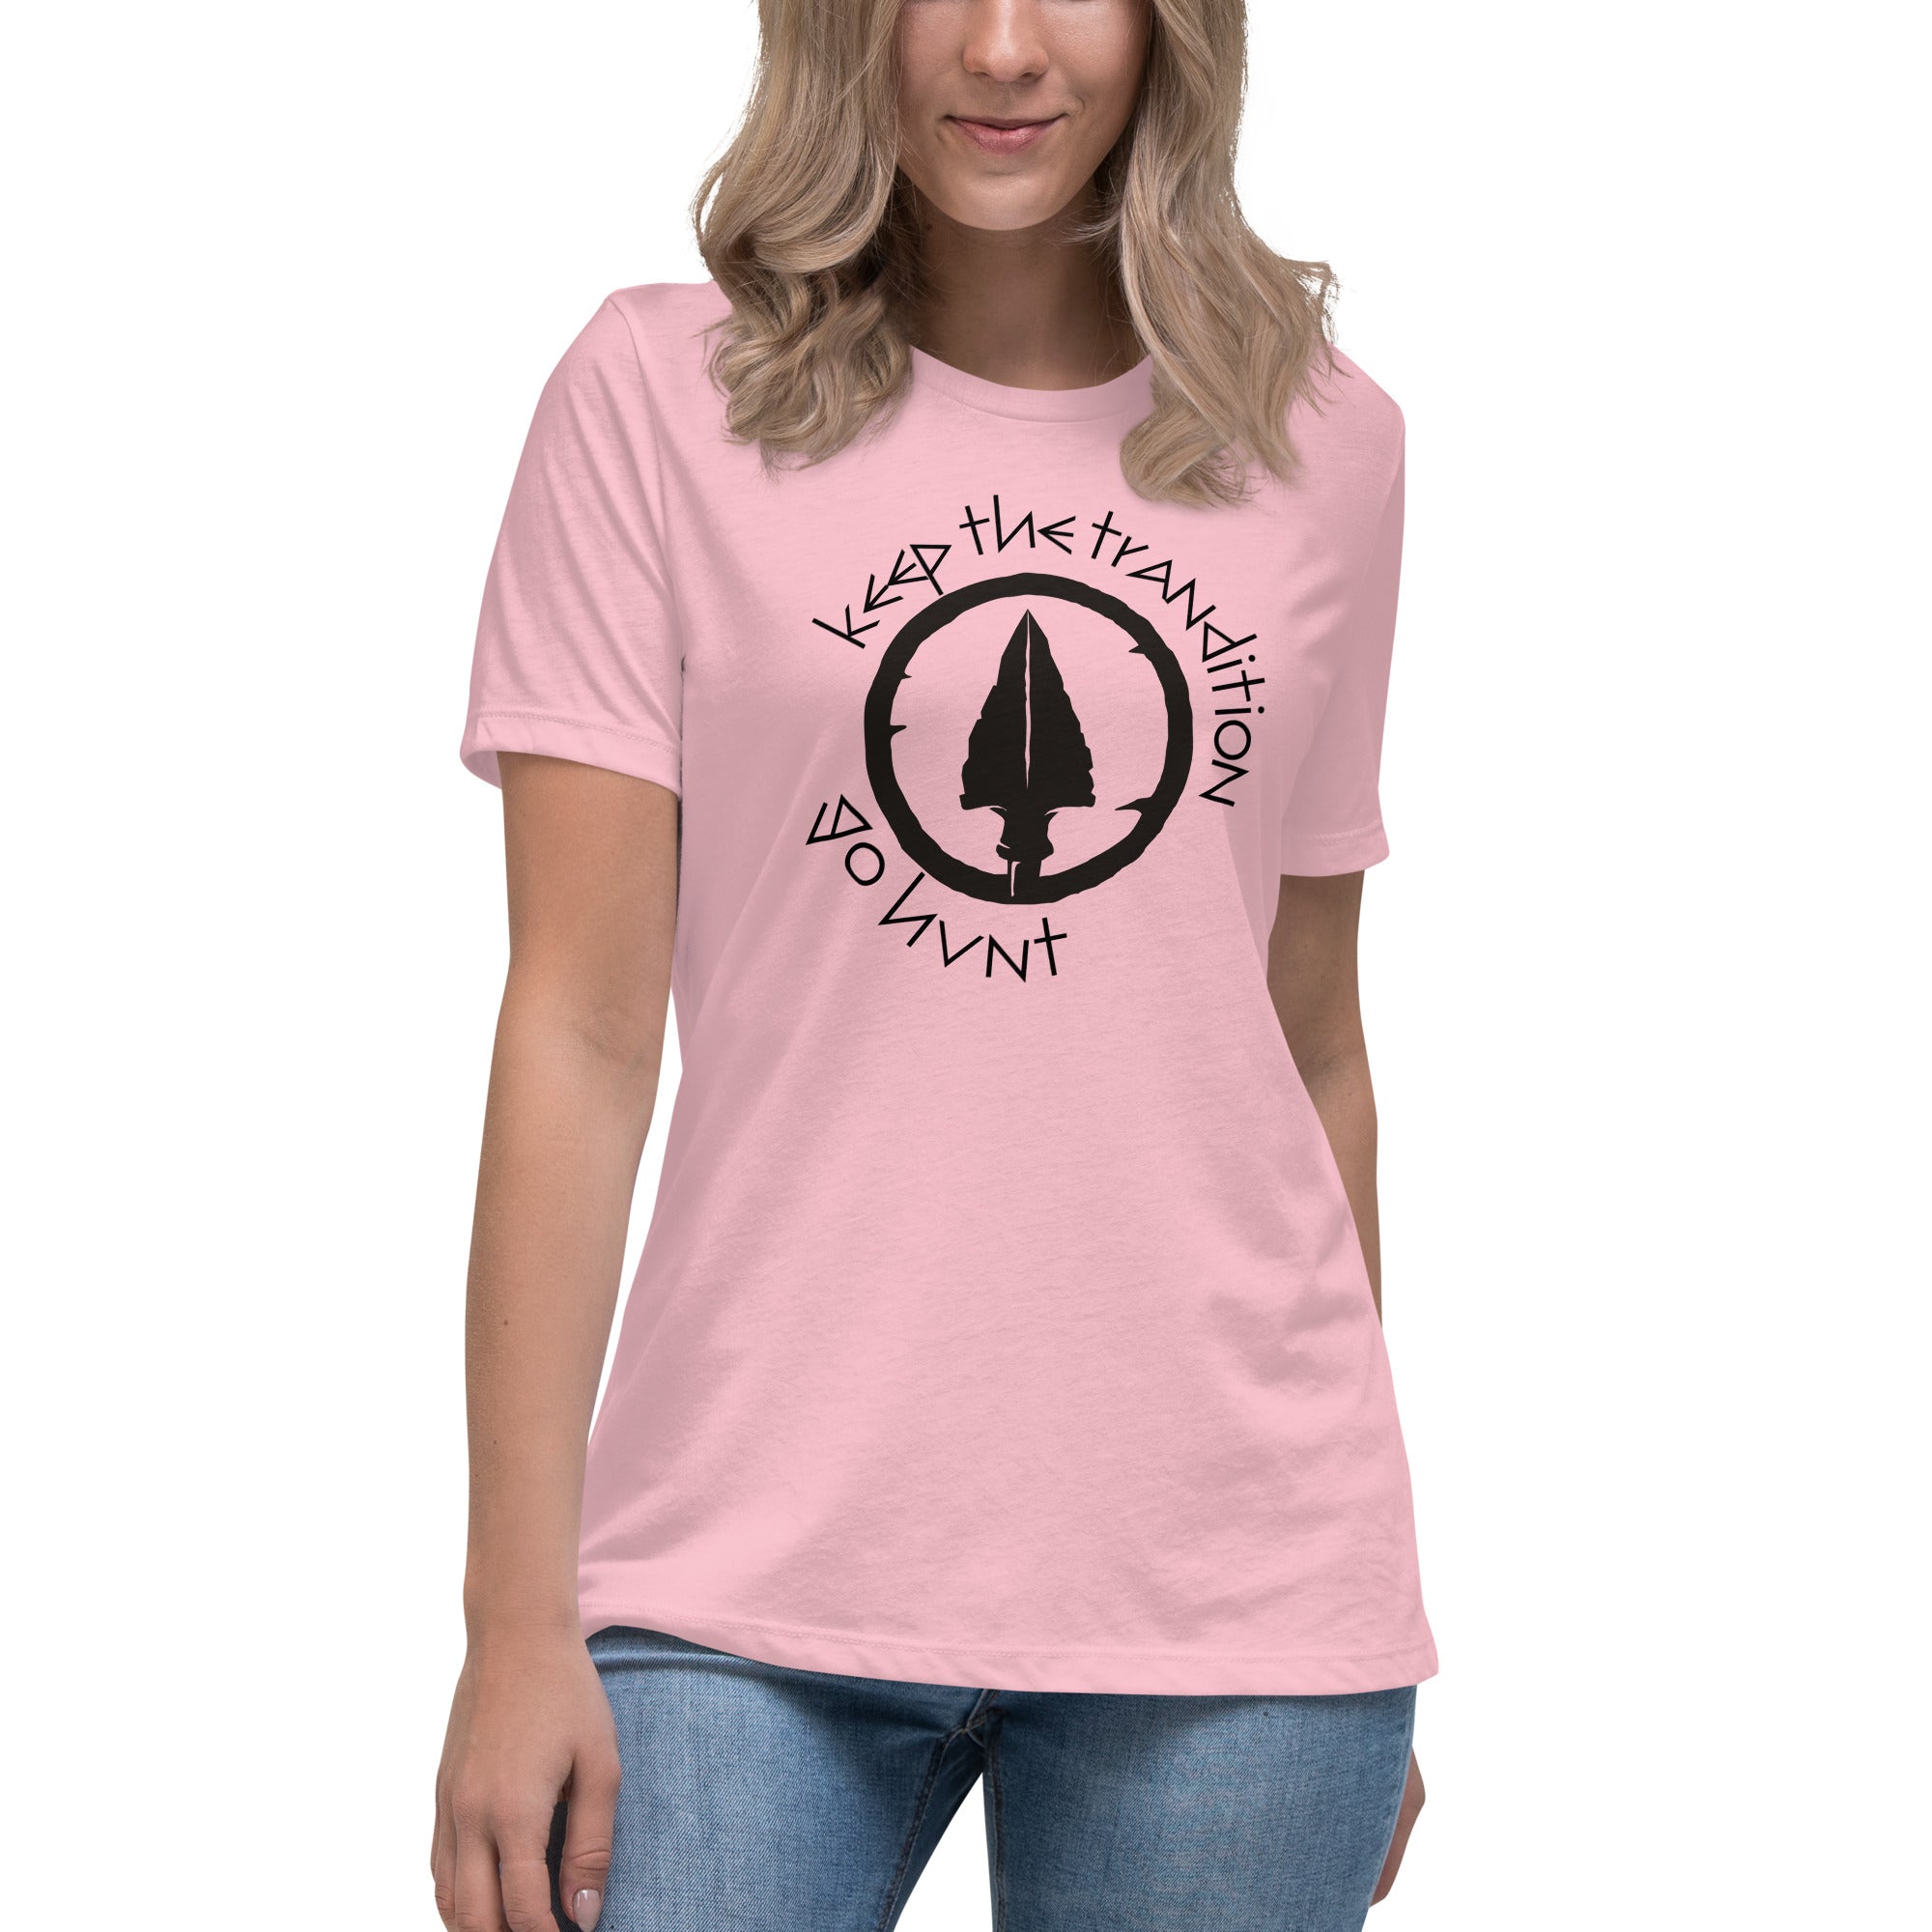 Keep The Tradition Women's Premium T-Shirt - Go Hunt